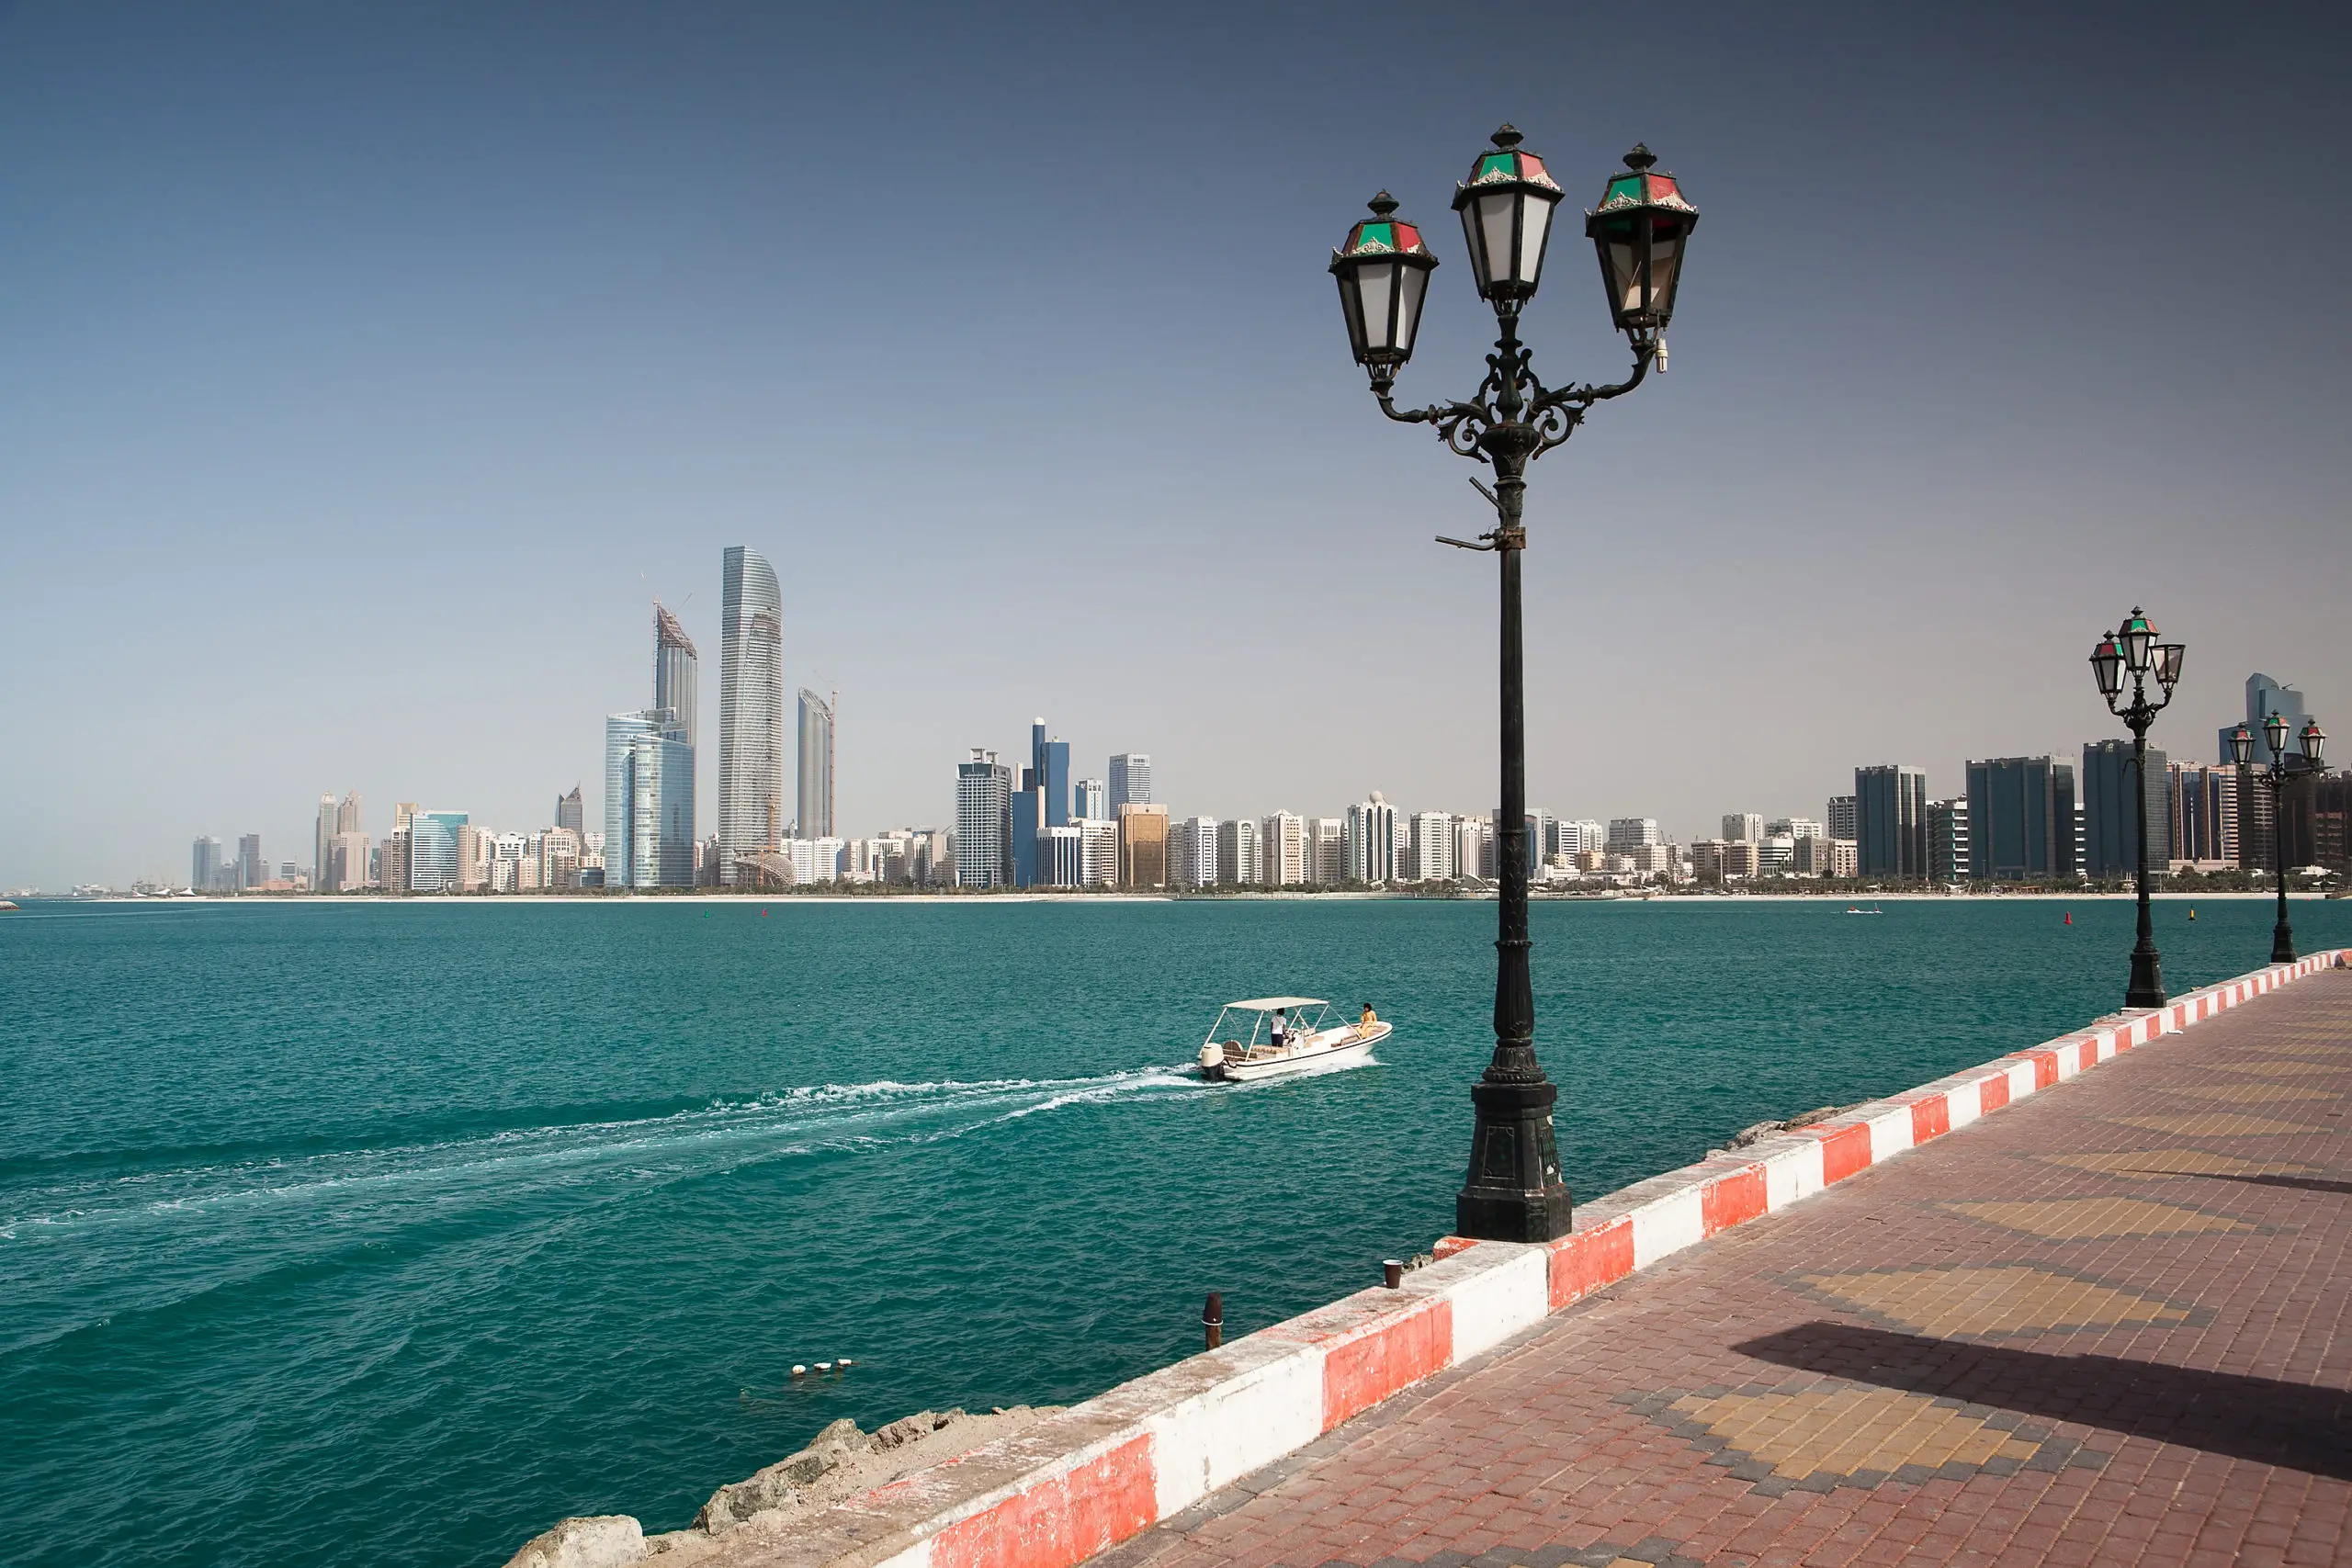 The Abu Dhabi Corniche